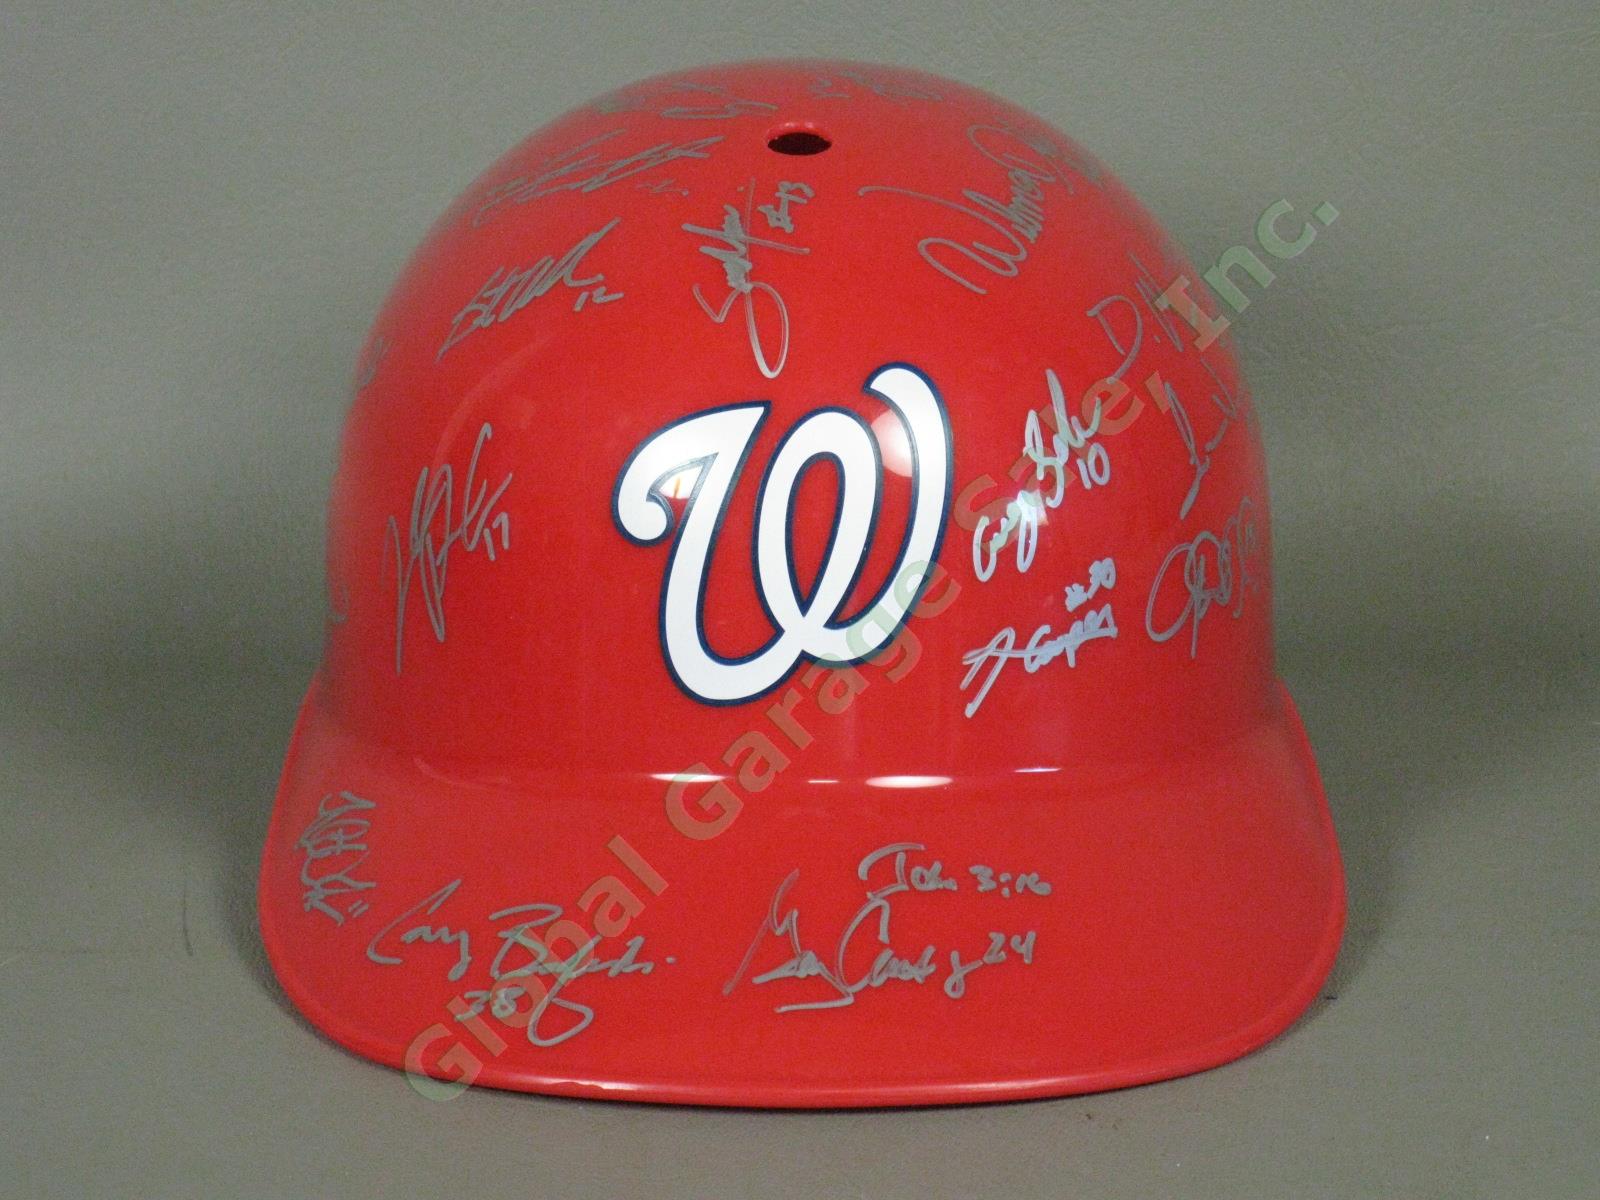 2013 Auburn Doubledays Team Signed Baseball Helmet NYPL Washington Nationals NR